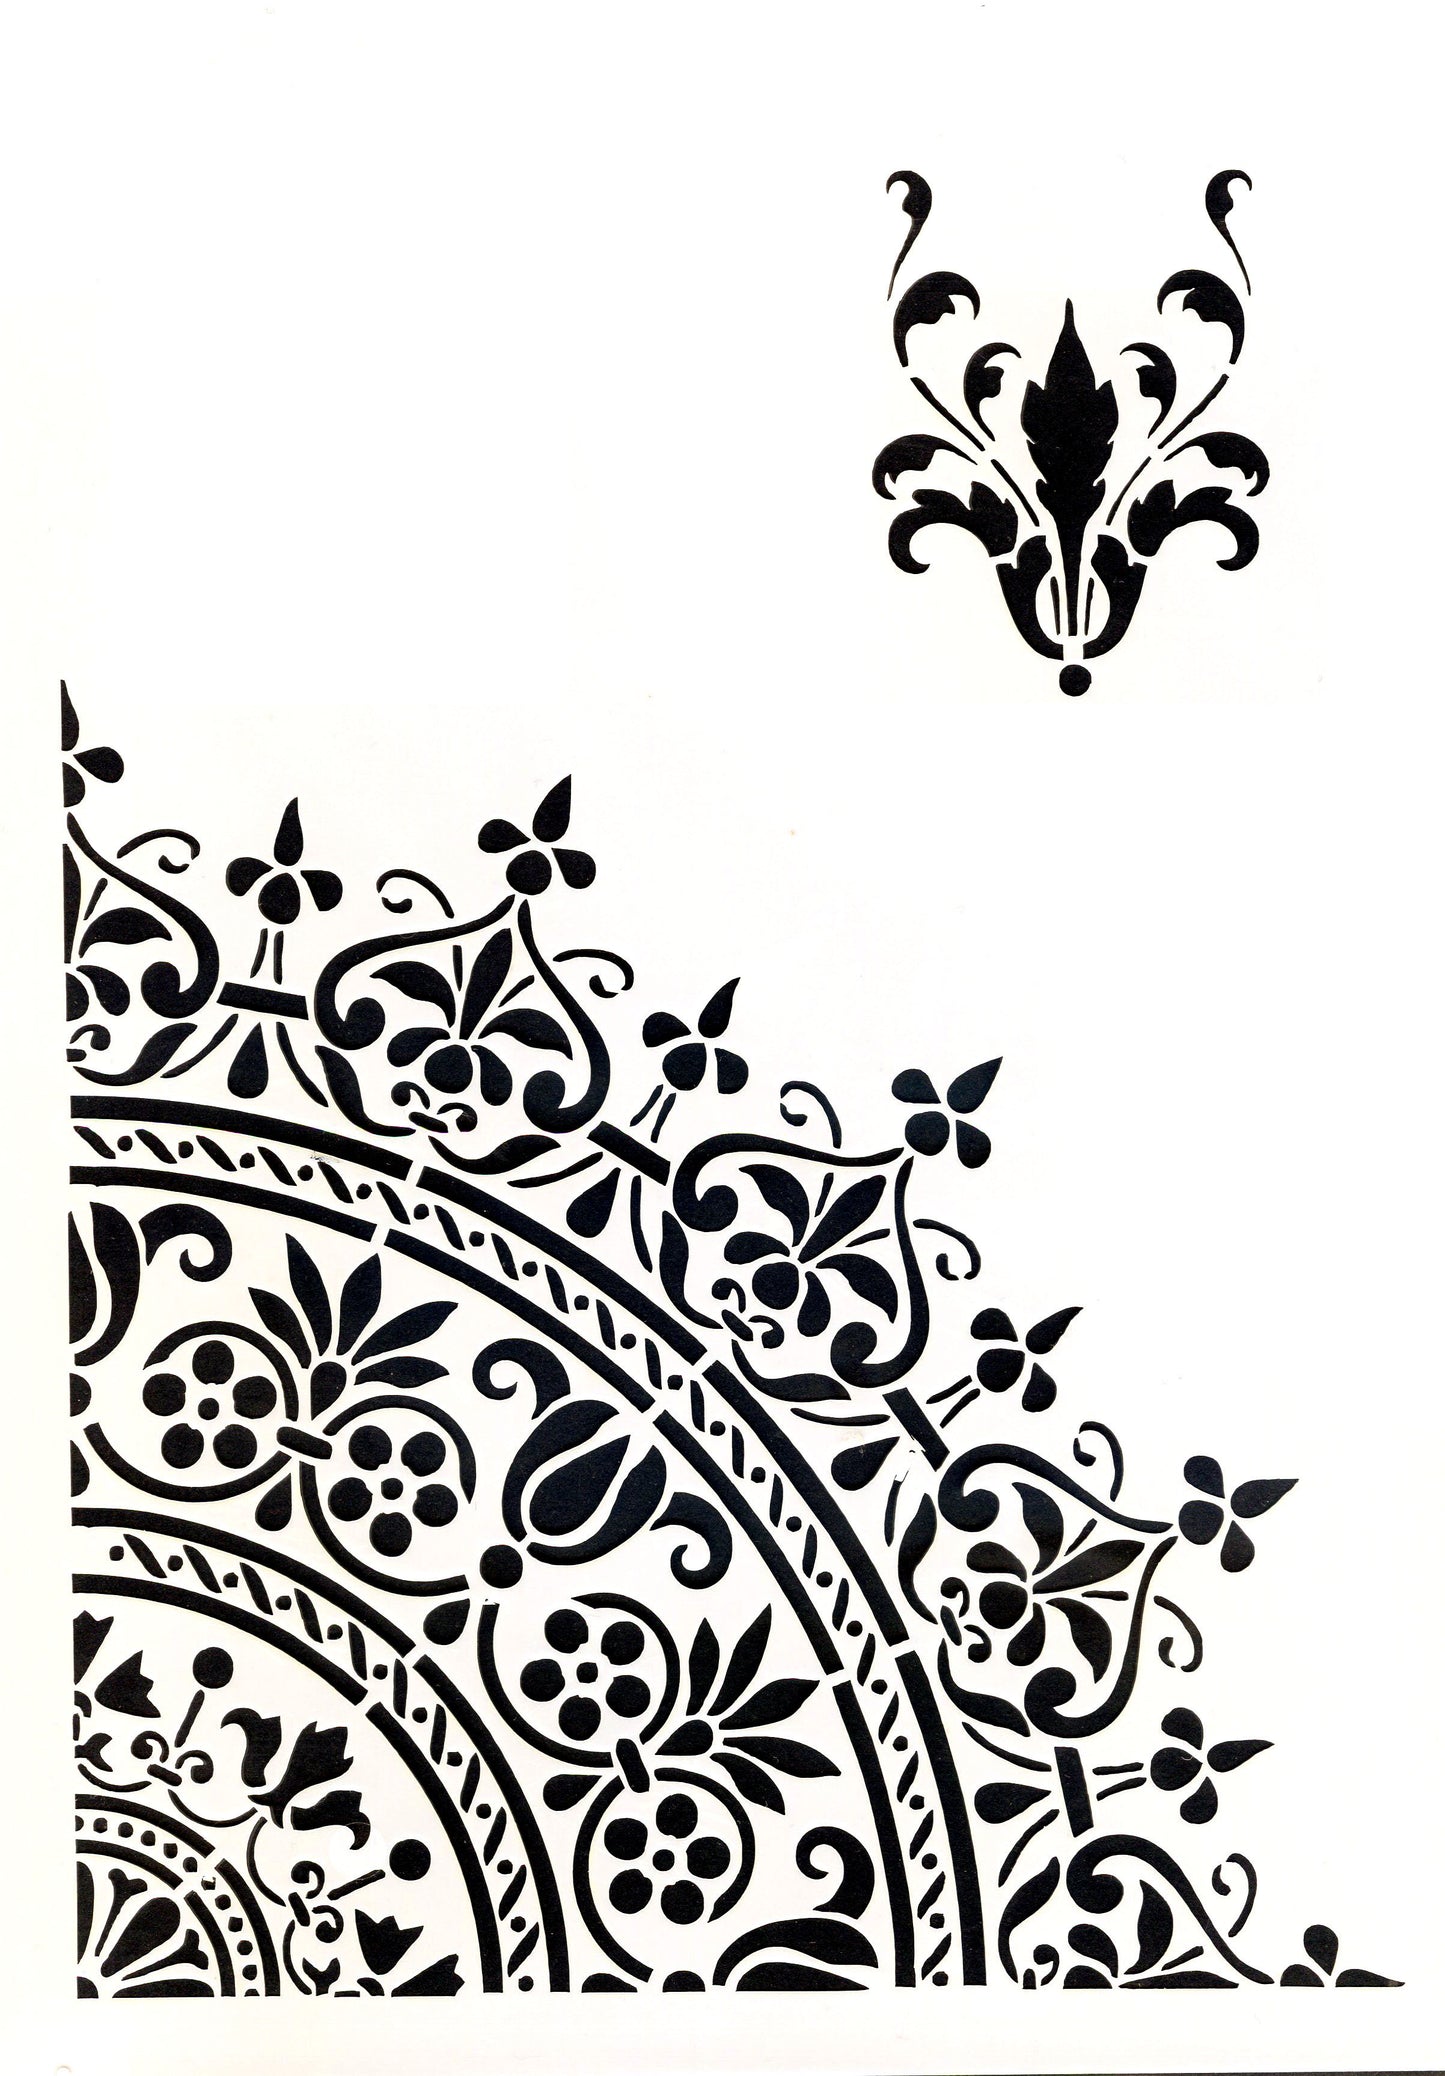 Mandala Set - Mandala Schablone für Wand, Möbel, Textil oder Basteln